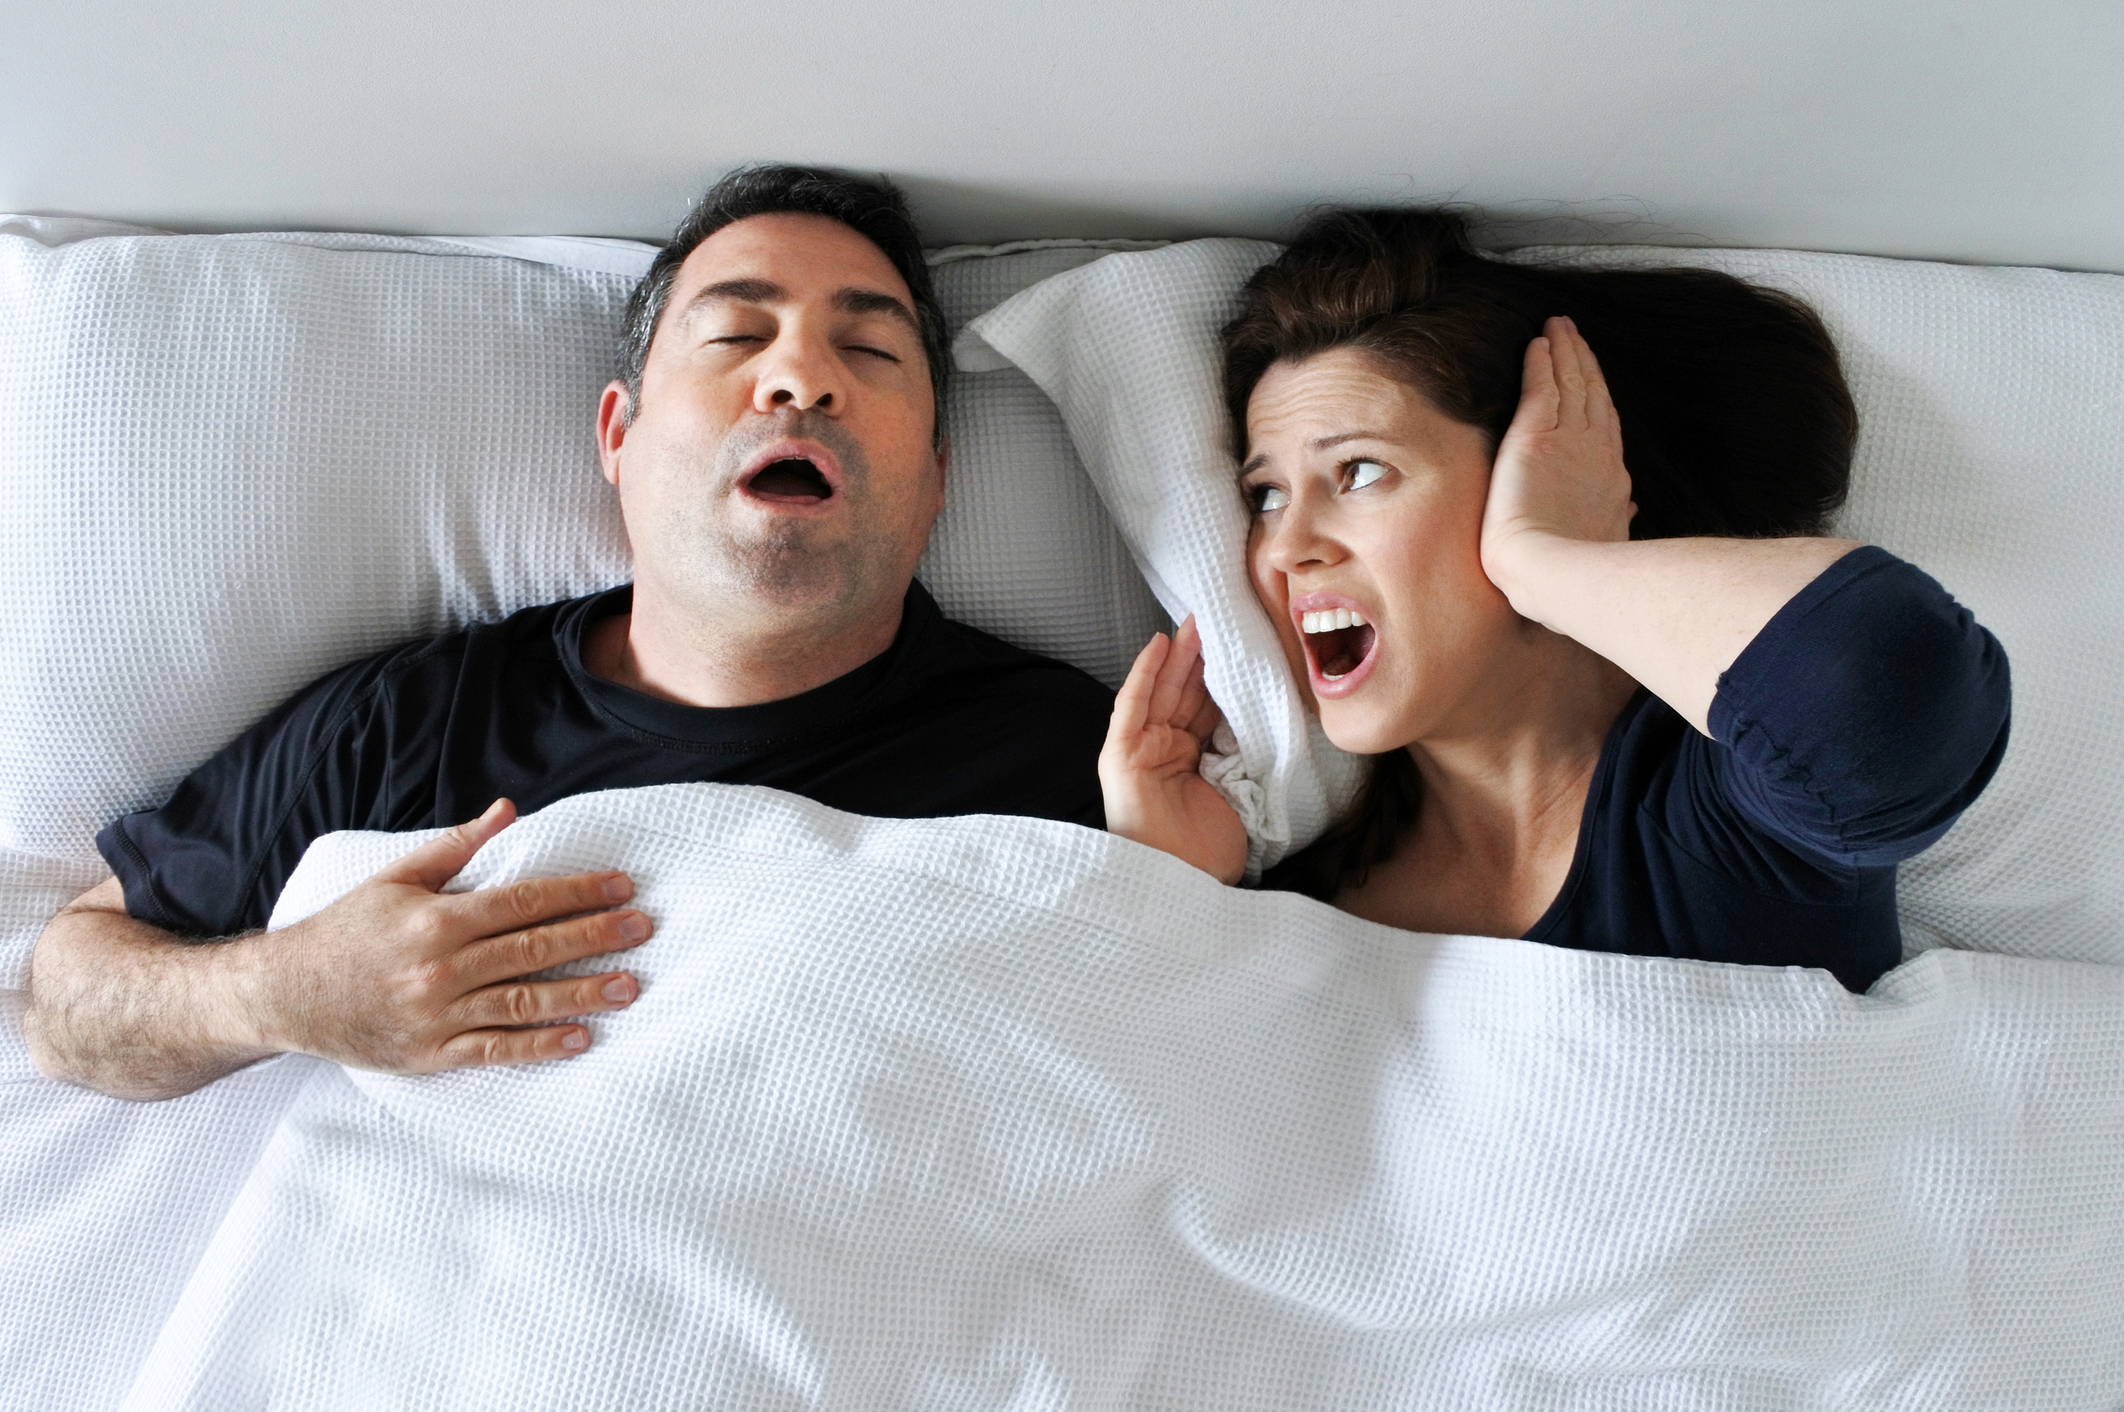 orofacial myofunctional disorders can result in snoring